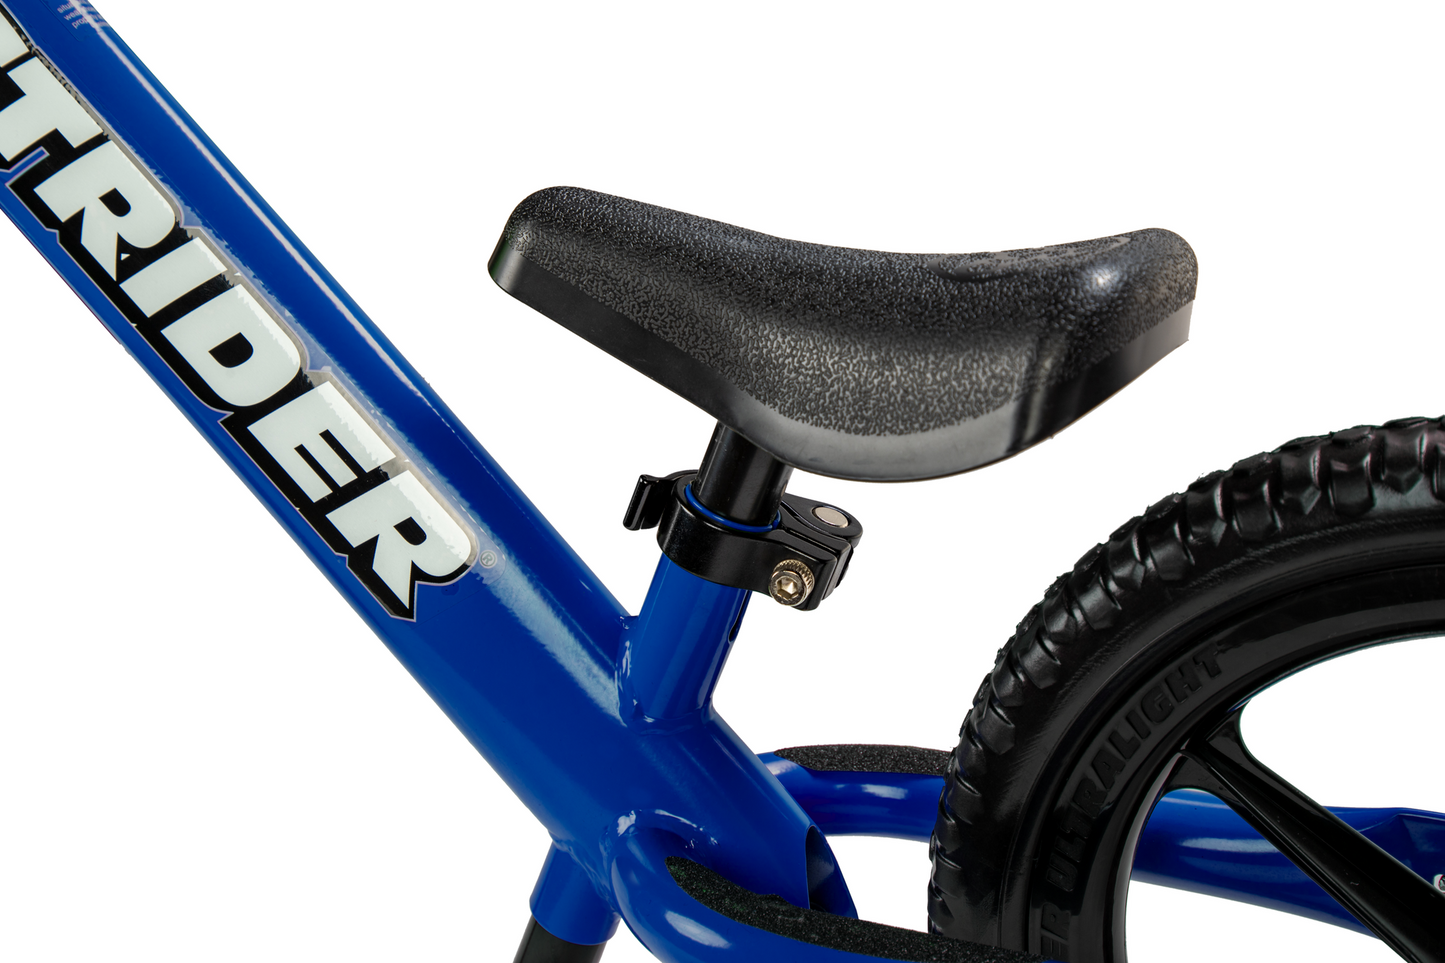 Strider 12 Classic Balance Bike - Blue